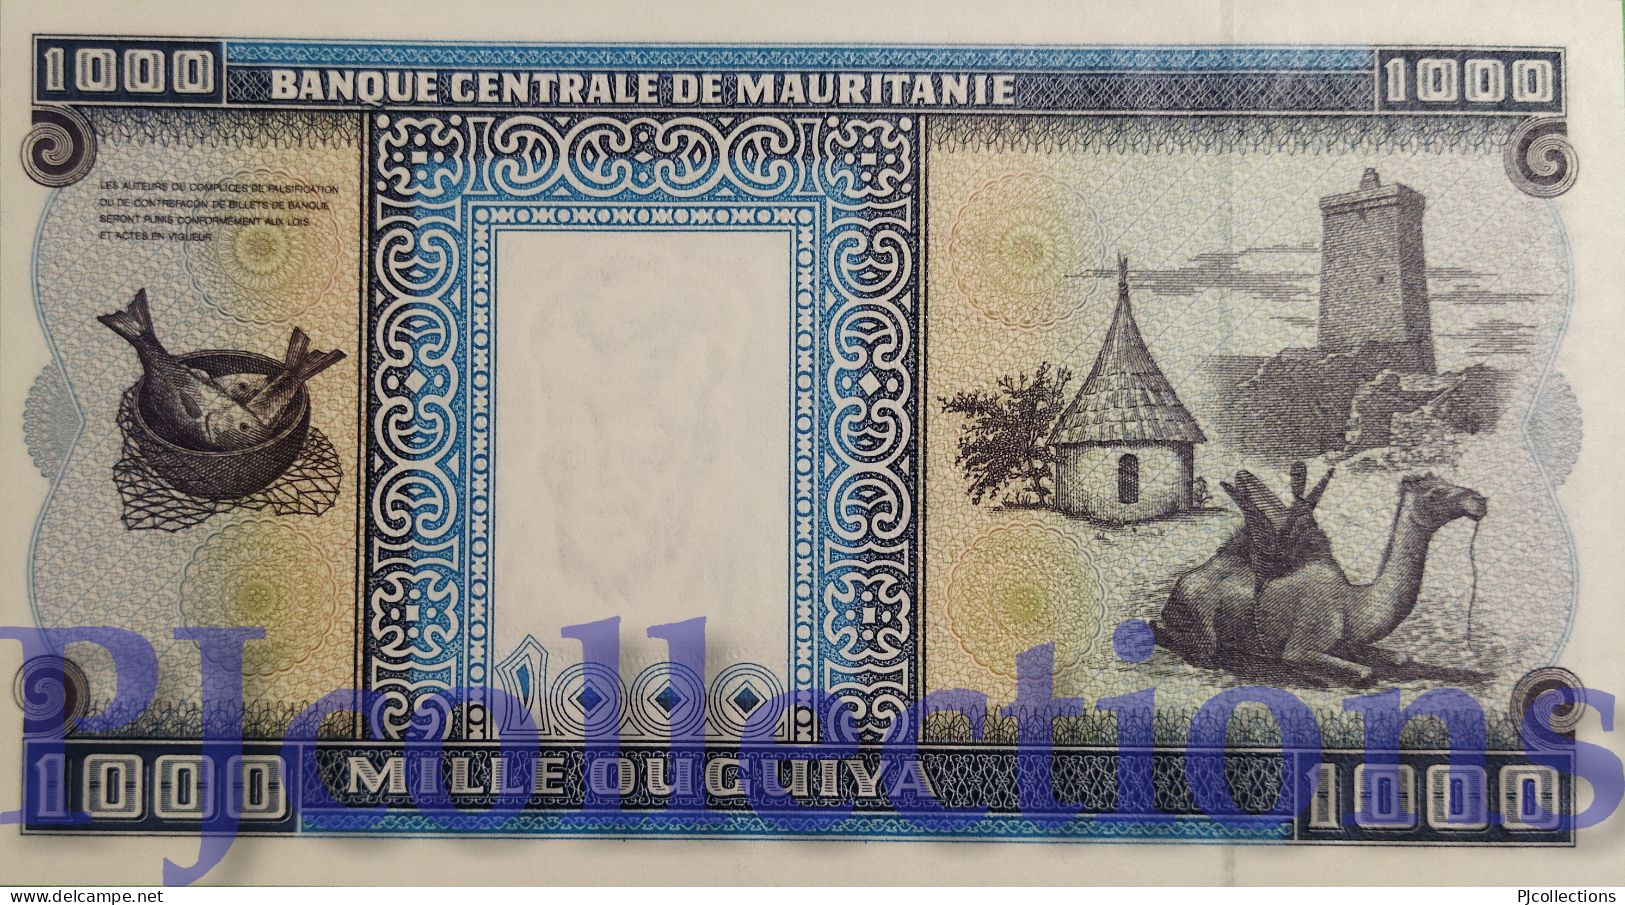 MAURITANIA 1000 OUGUIYA 1999 PICK 9a UNC - Mauritania